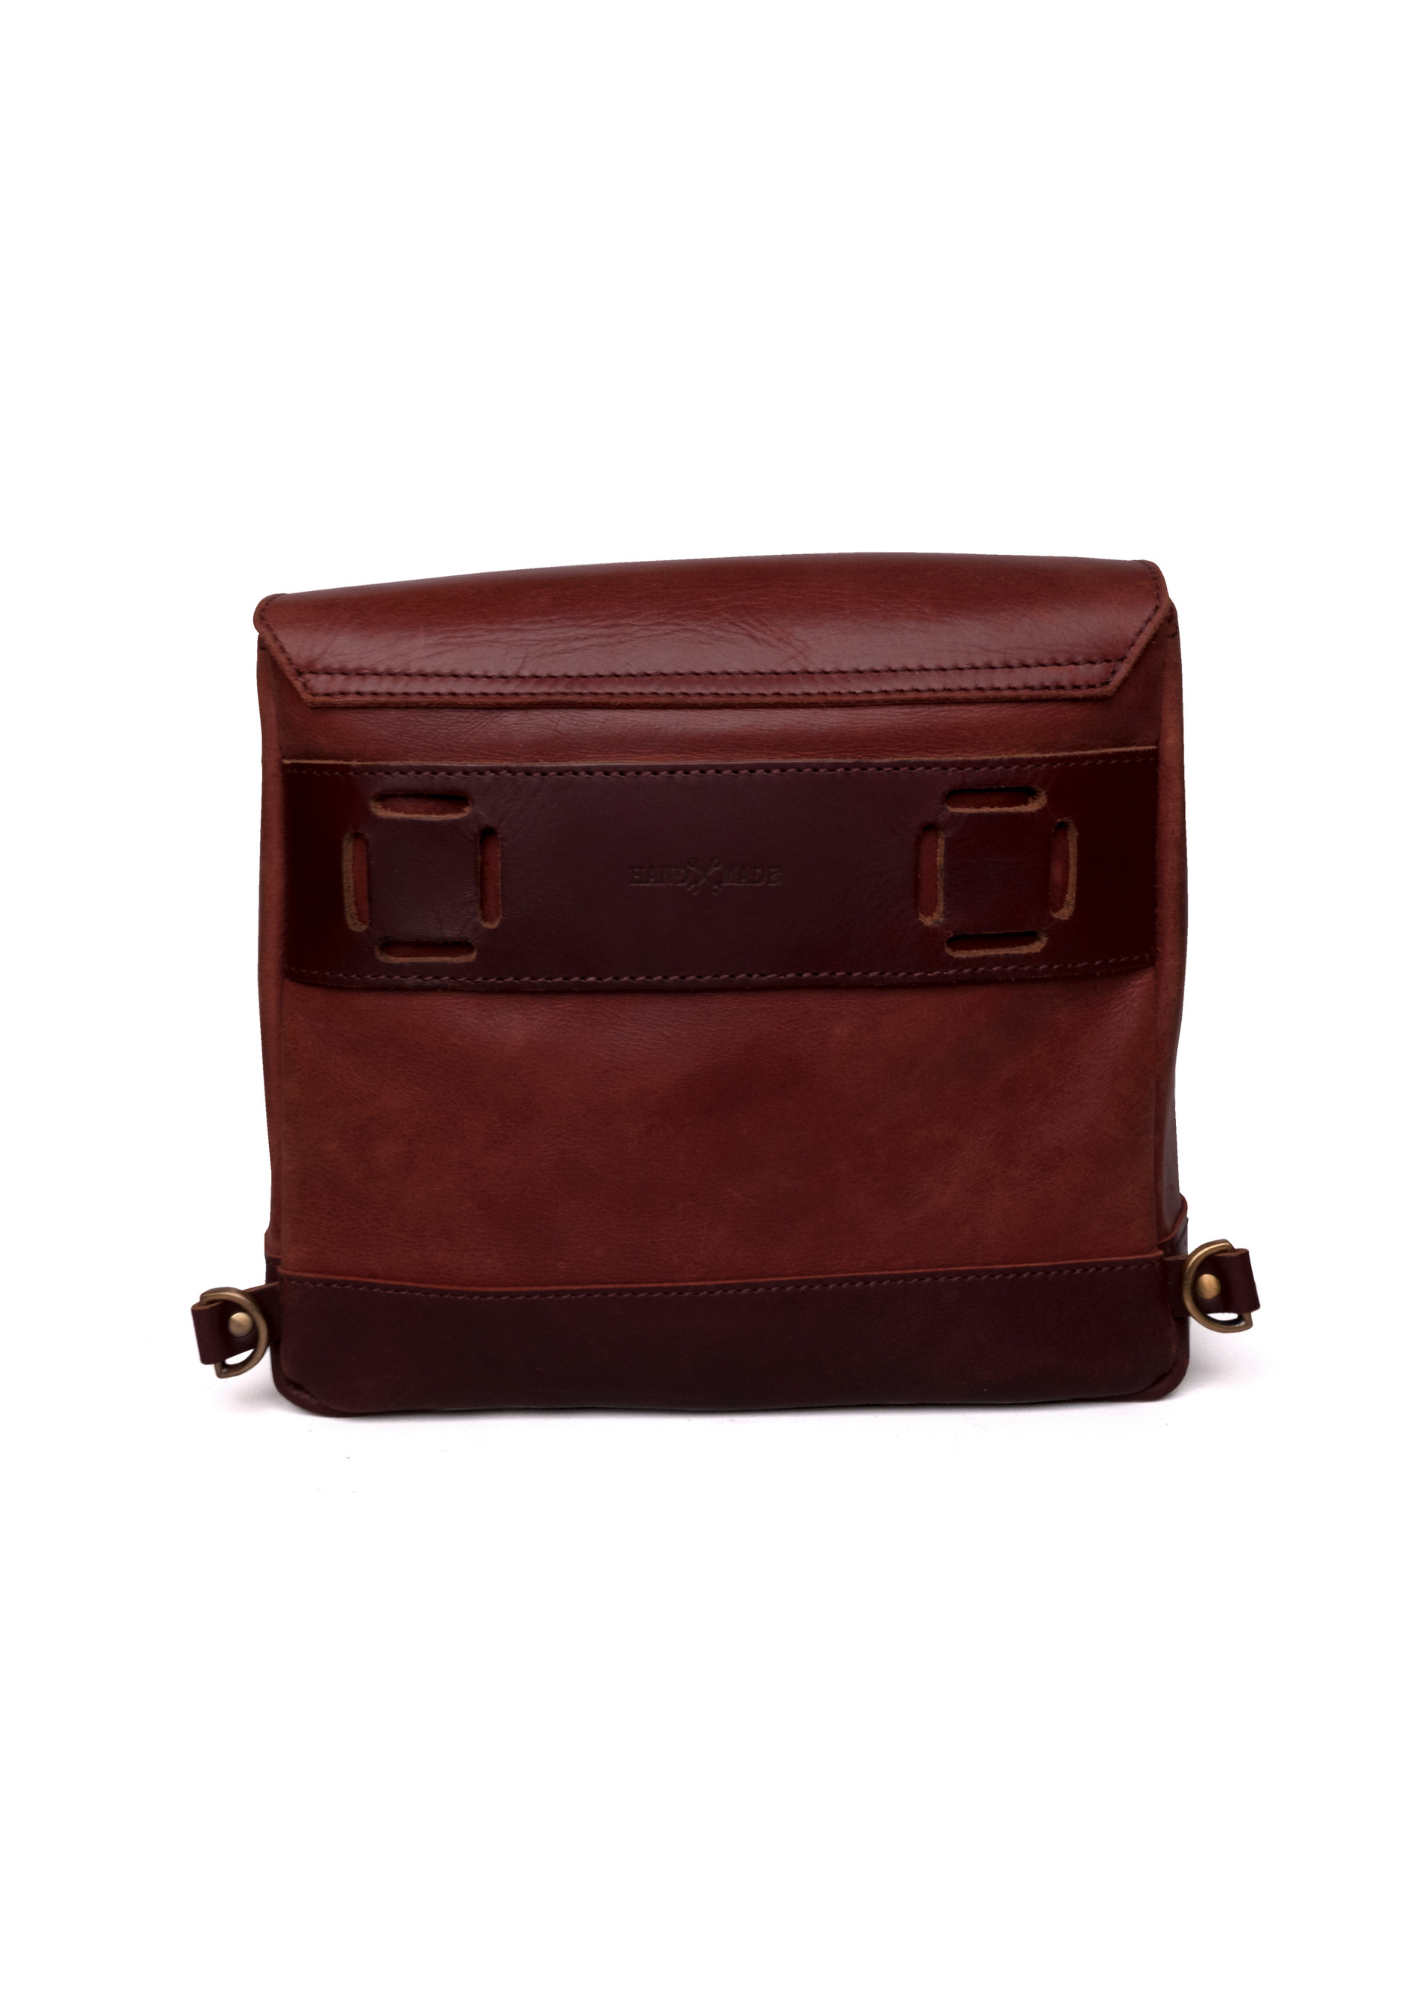 Joseph Abboud Messenger Style Briefcase | All Sale| Men's Wearhouse